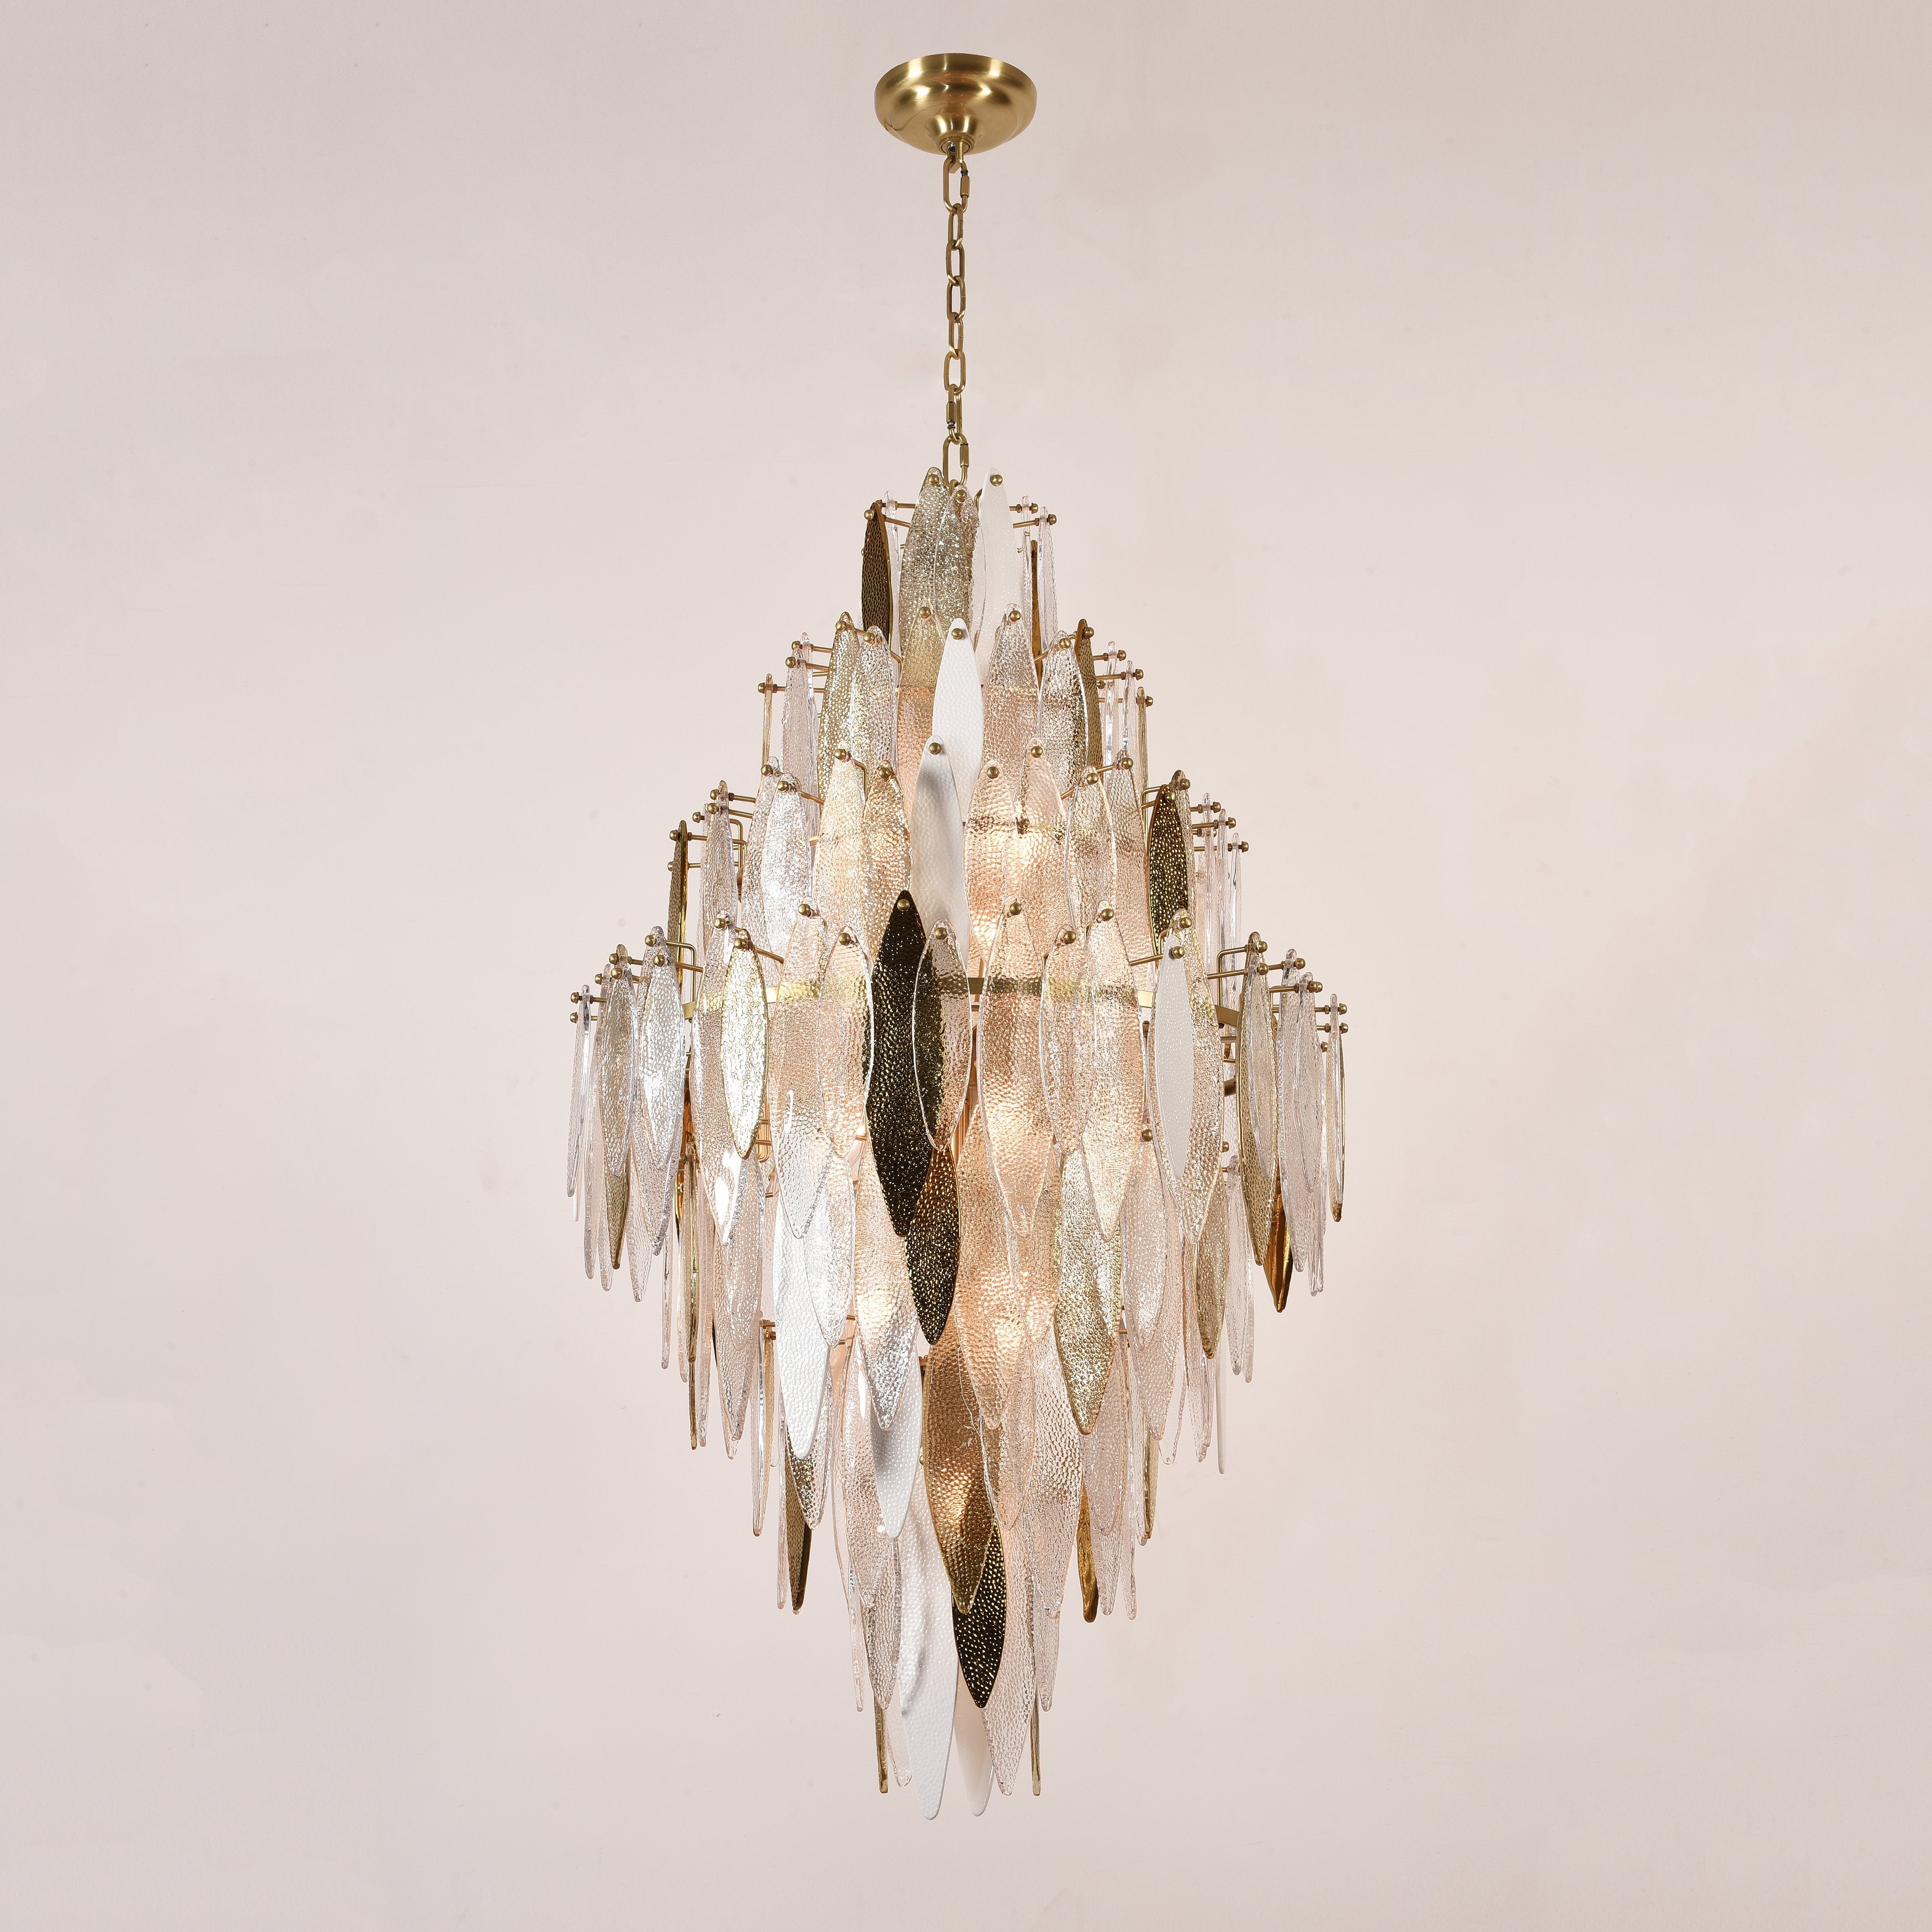 Alba Empire Tiered Oval Glass Chandelier - Italian Concept - 